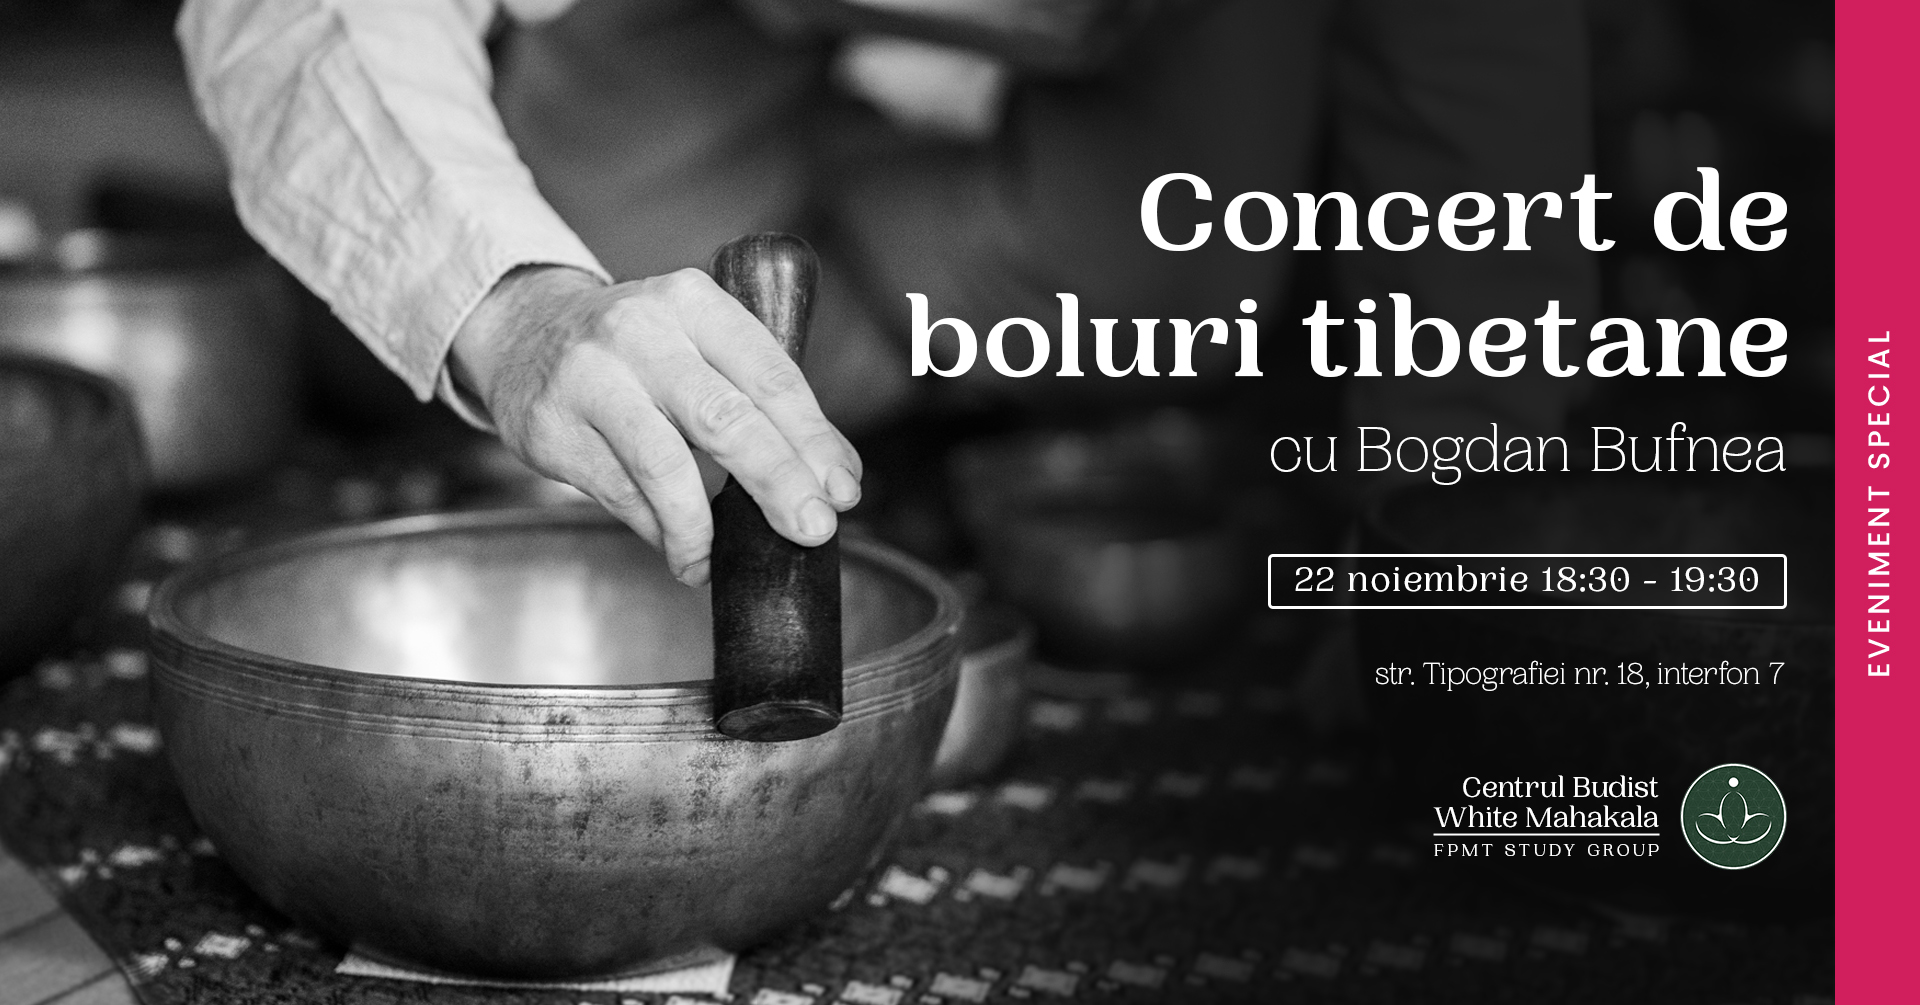 Concert de boluri tibetane, cu Bogdan Bufnea